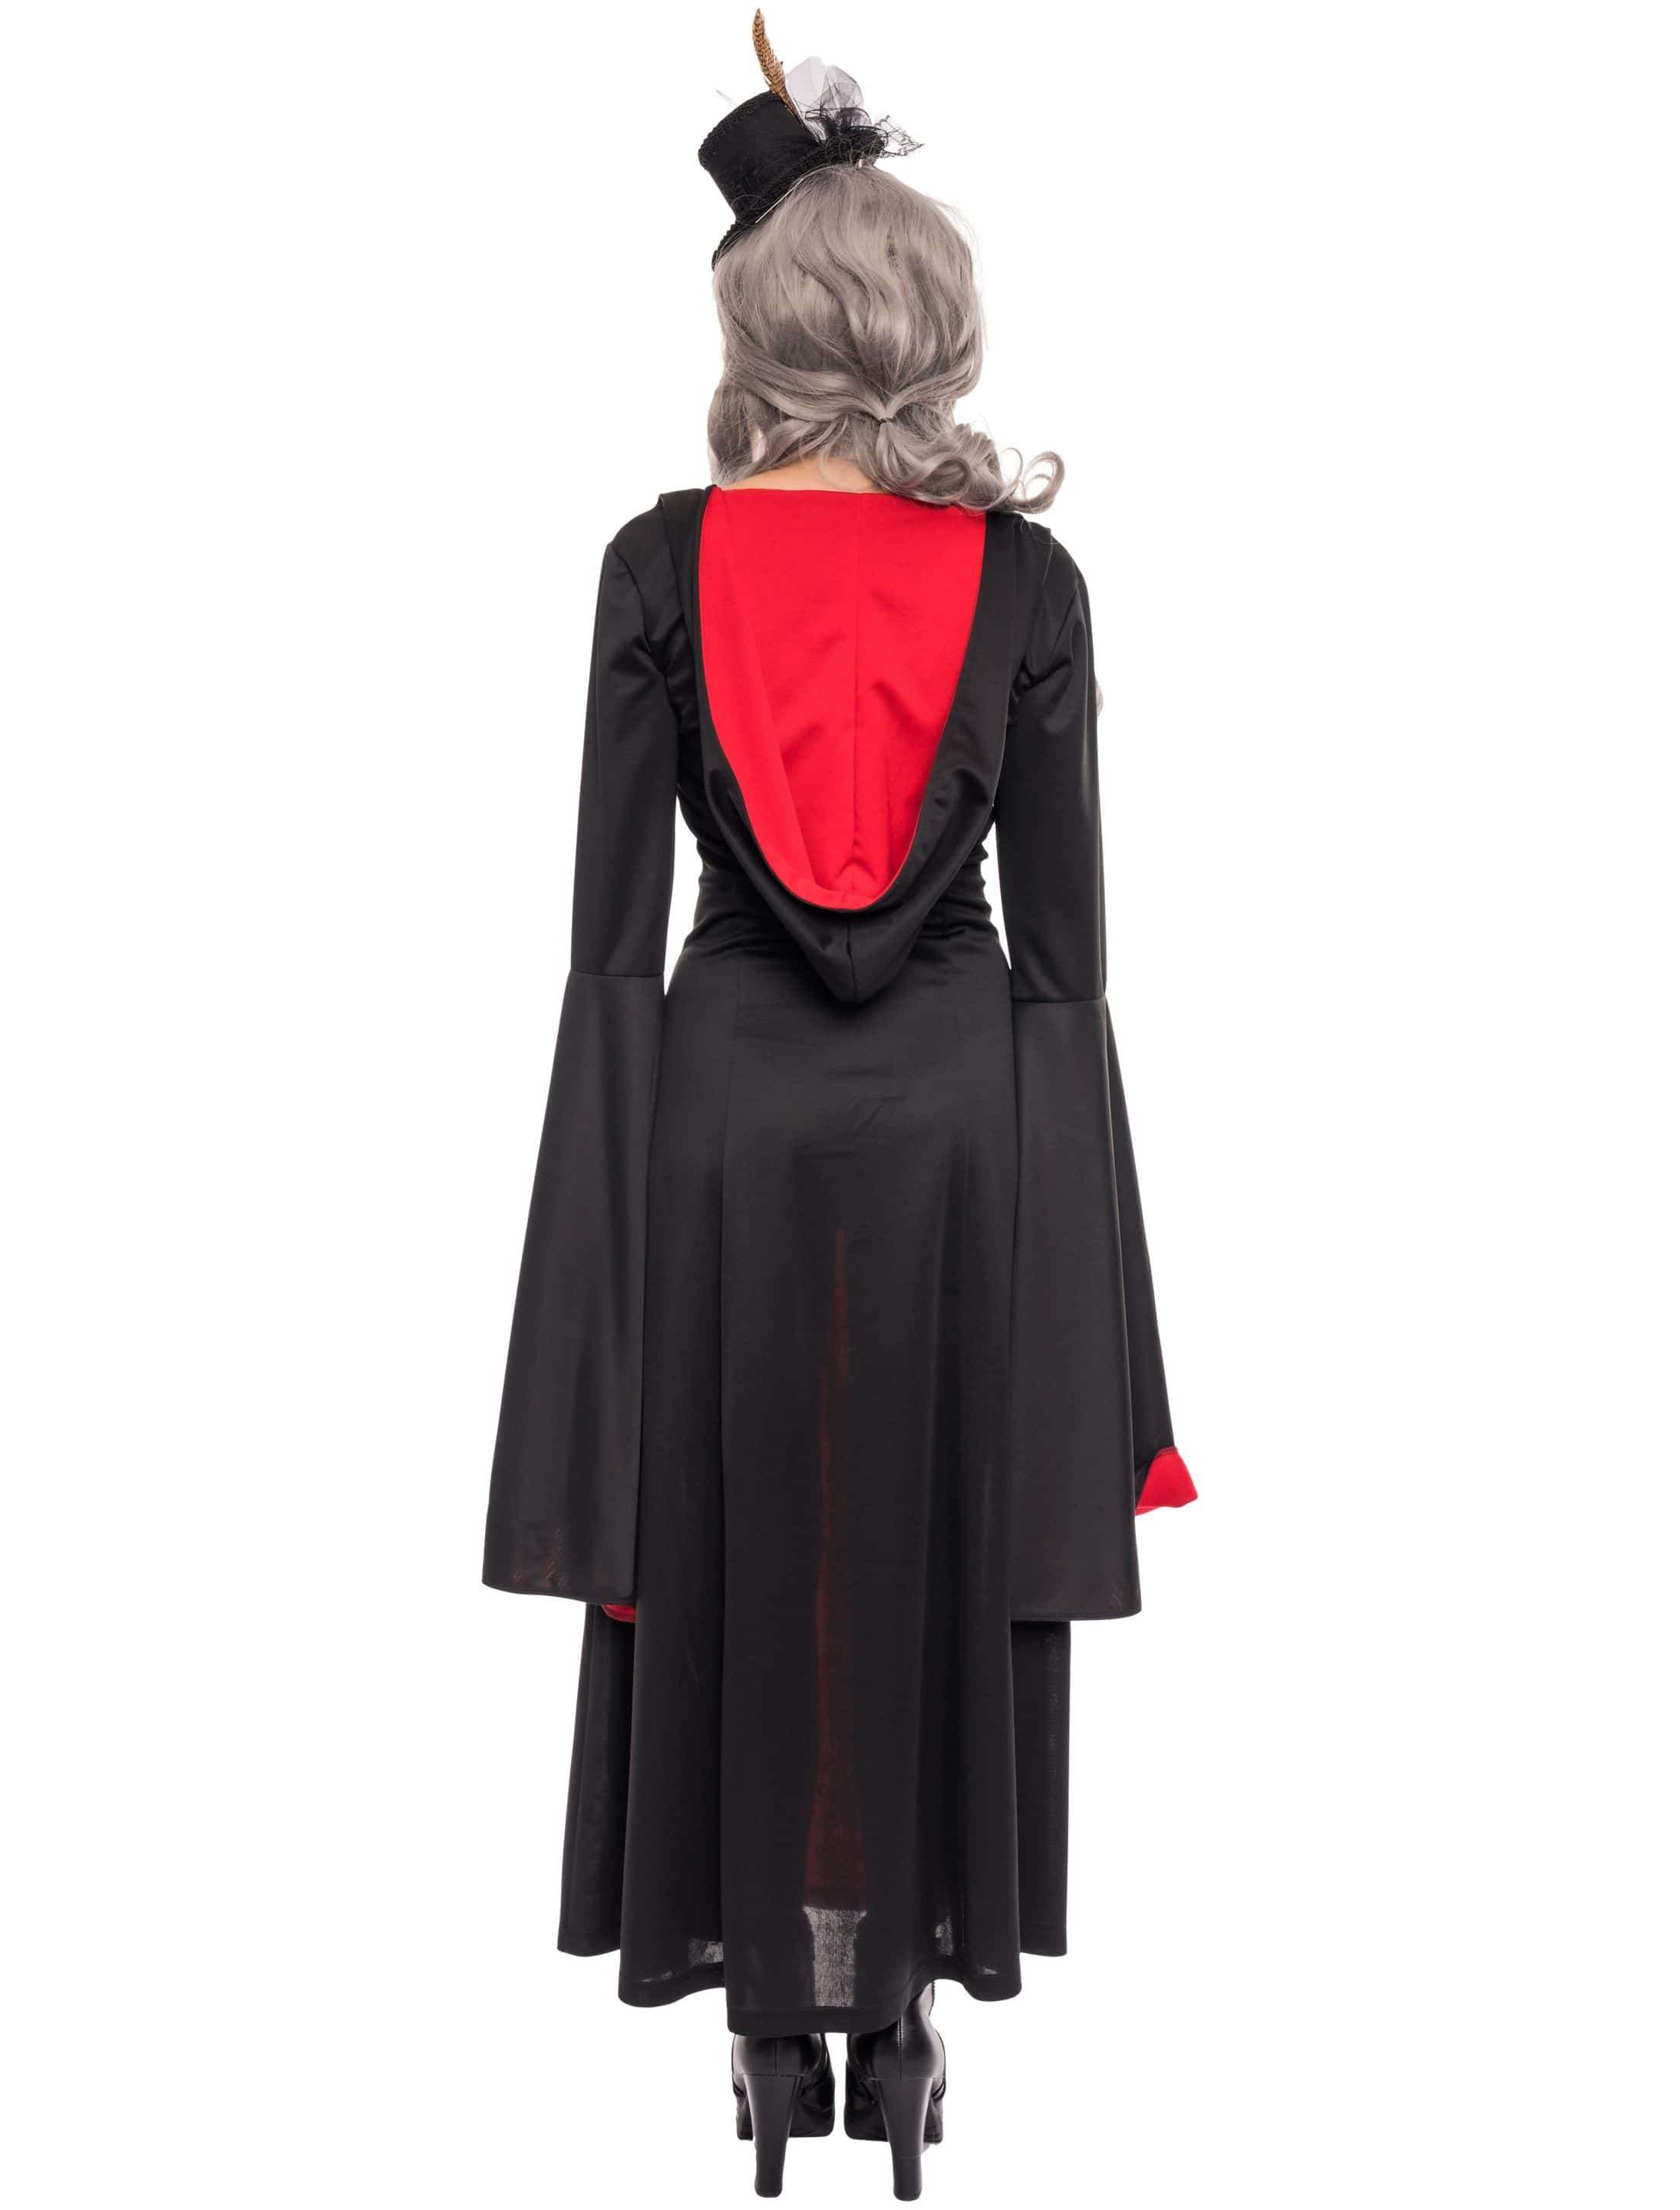 Kleid mit Kapuze Damen schwarz/rot L